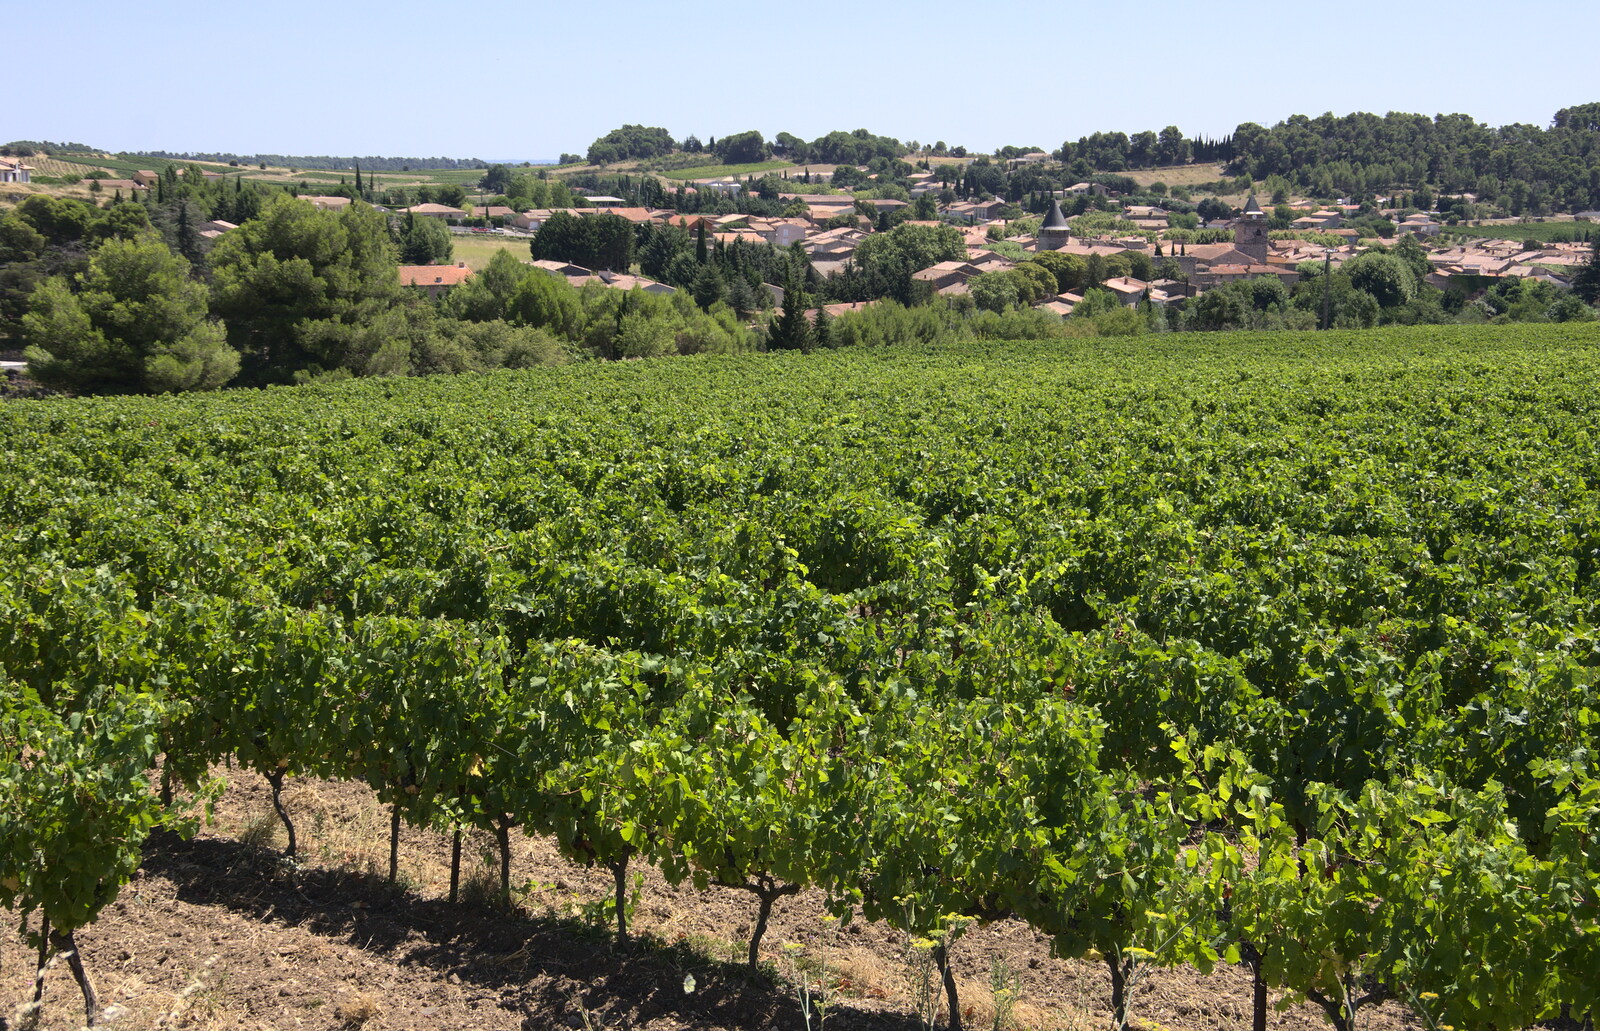 The town of Villeneuve de Minervois and some vines from Le Gouffre Géant and Grotte de Limousis, Petanque and a Lightning Storm, Languedoc, France - 12th August 2018